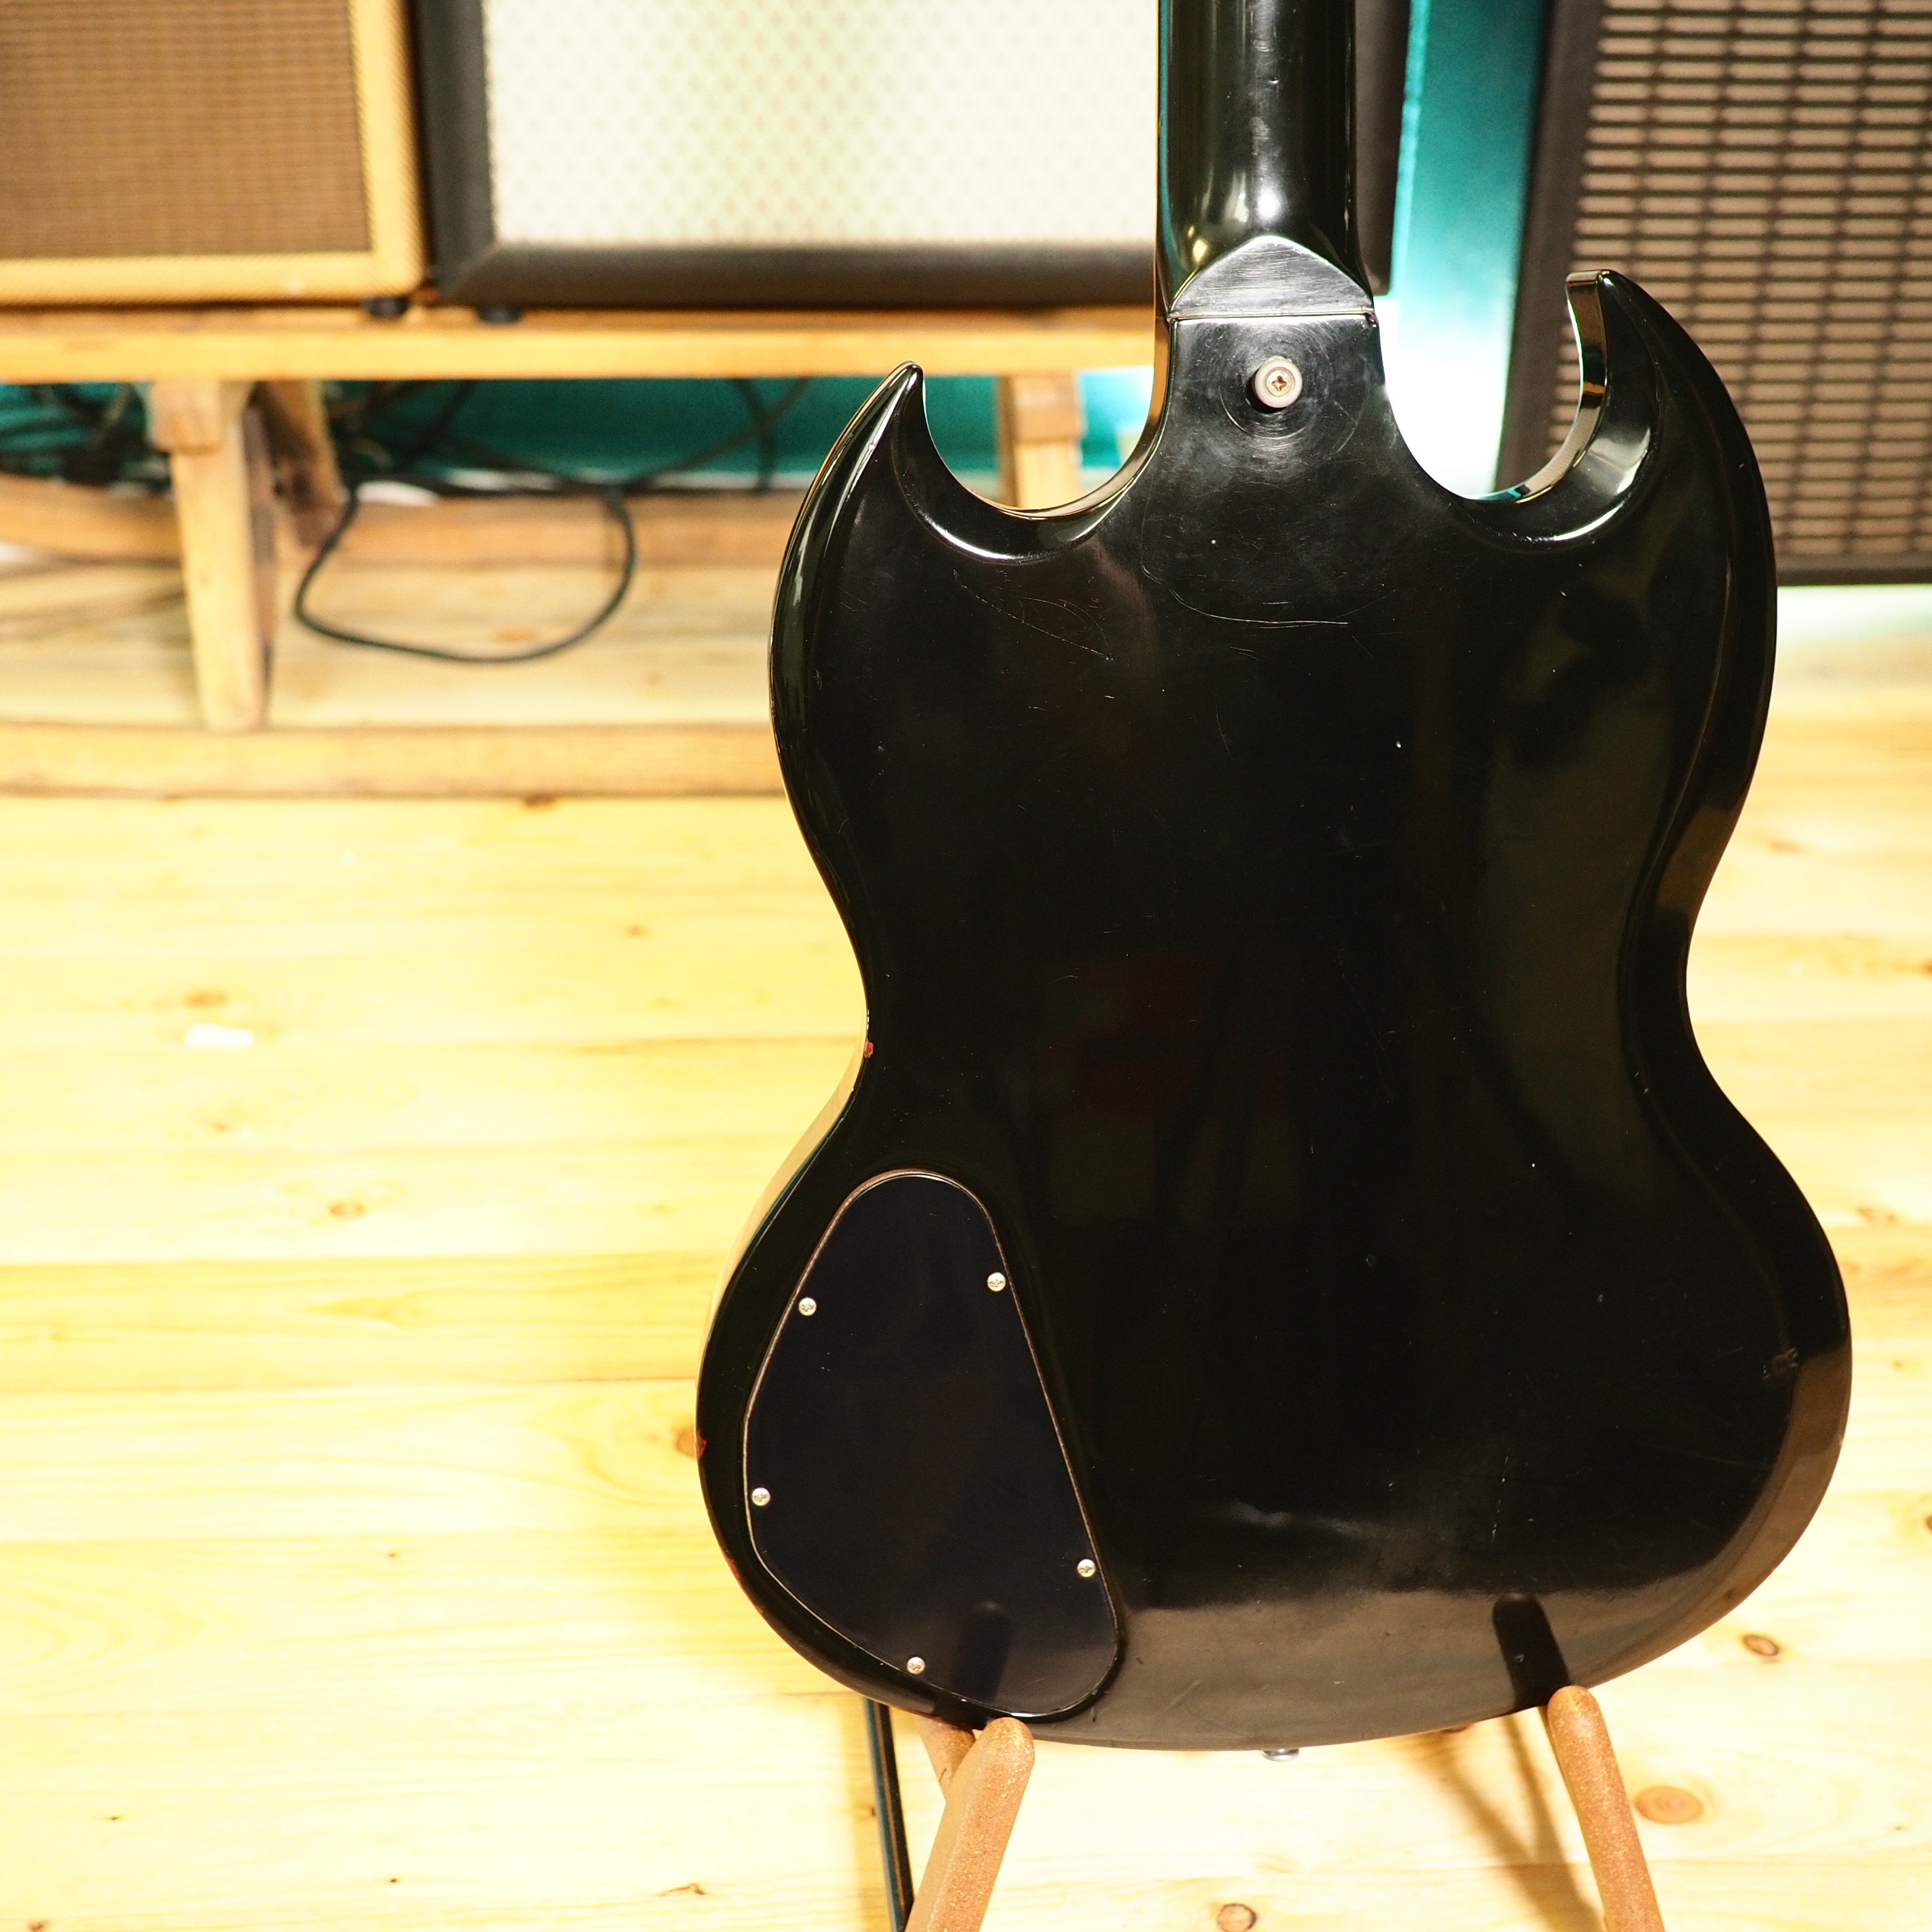 Gibson SG Standard Ebony from 2002